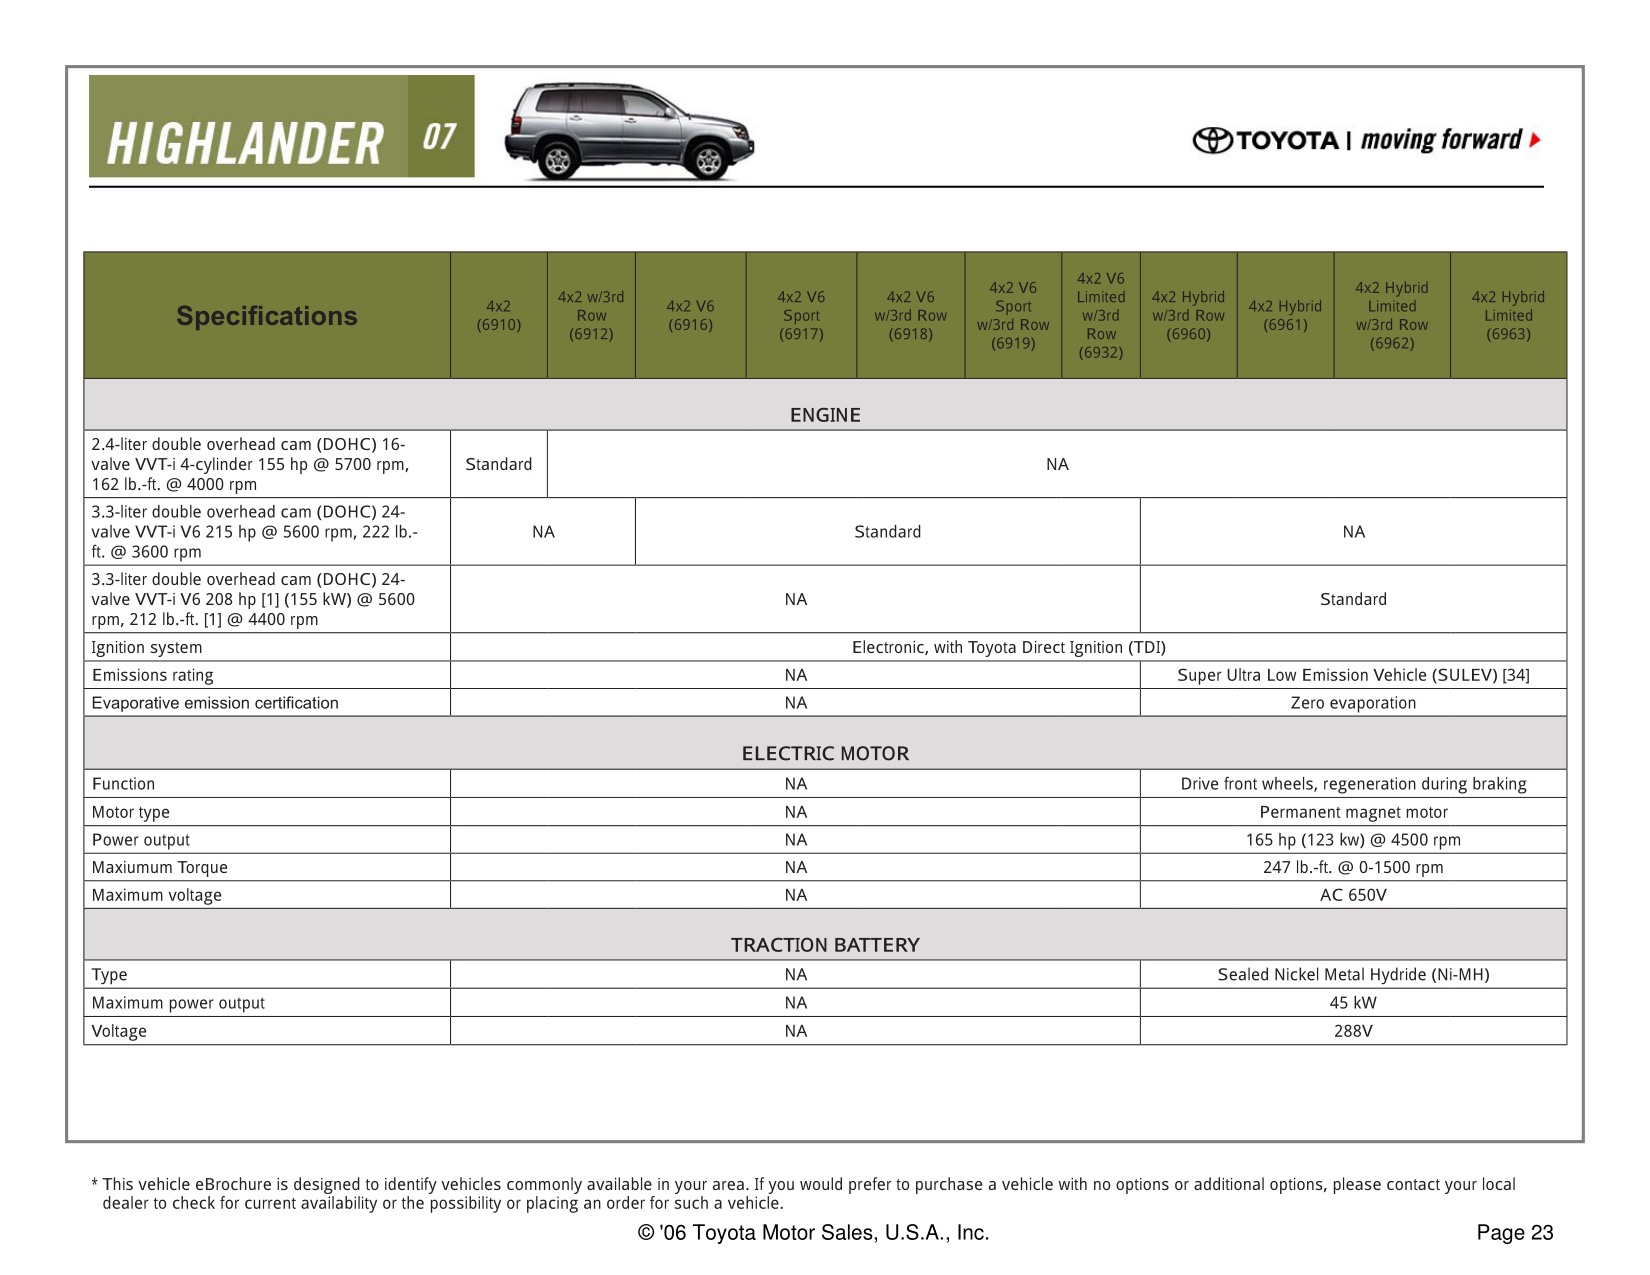 2007 Toyota Highlander Brochure Page 25